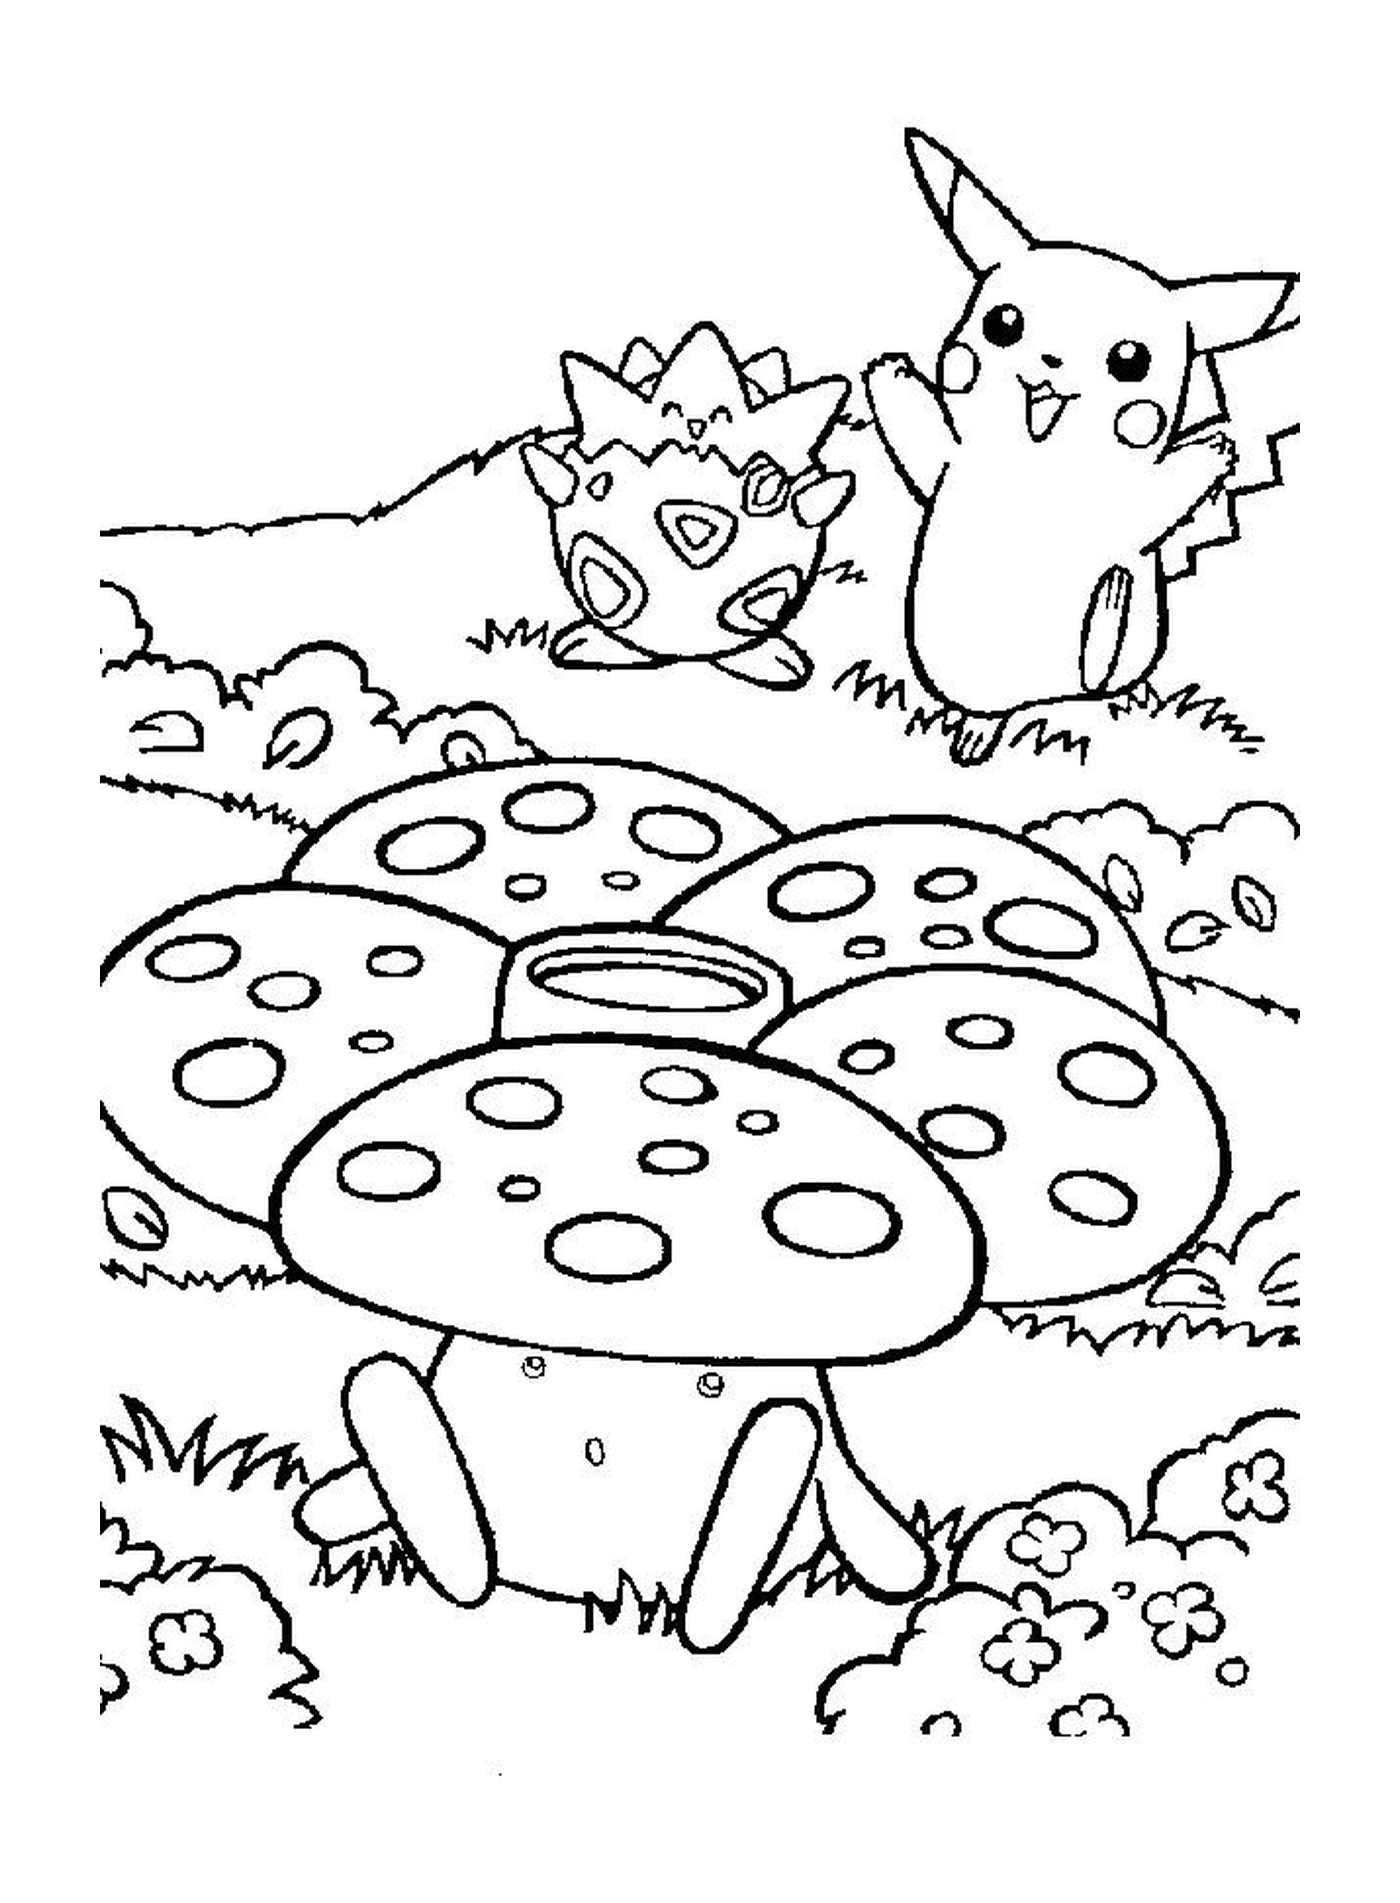  Pikachu con un fungo 